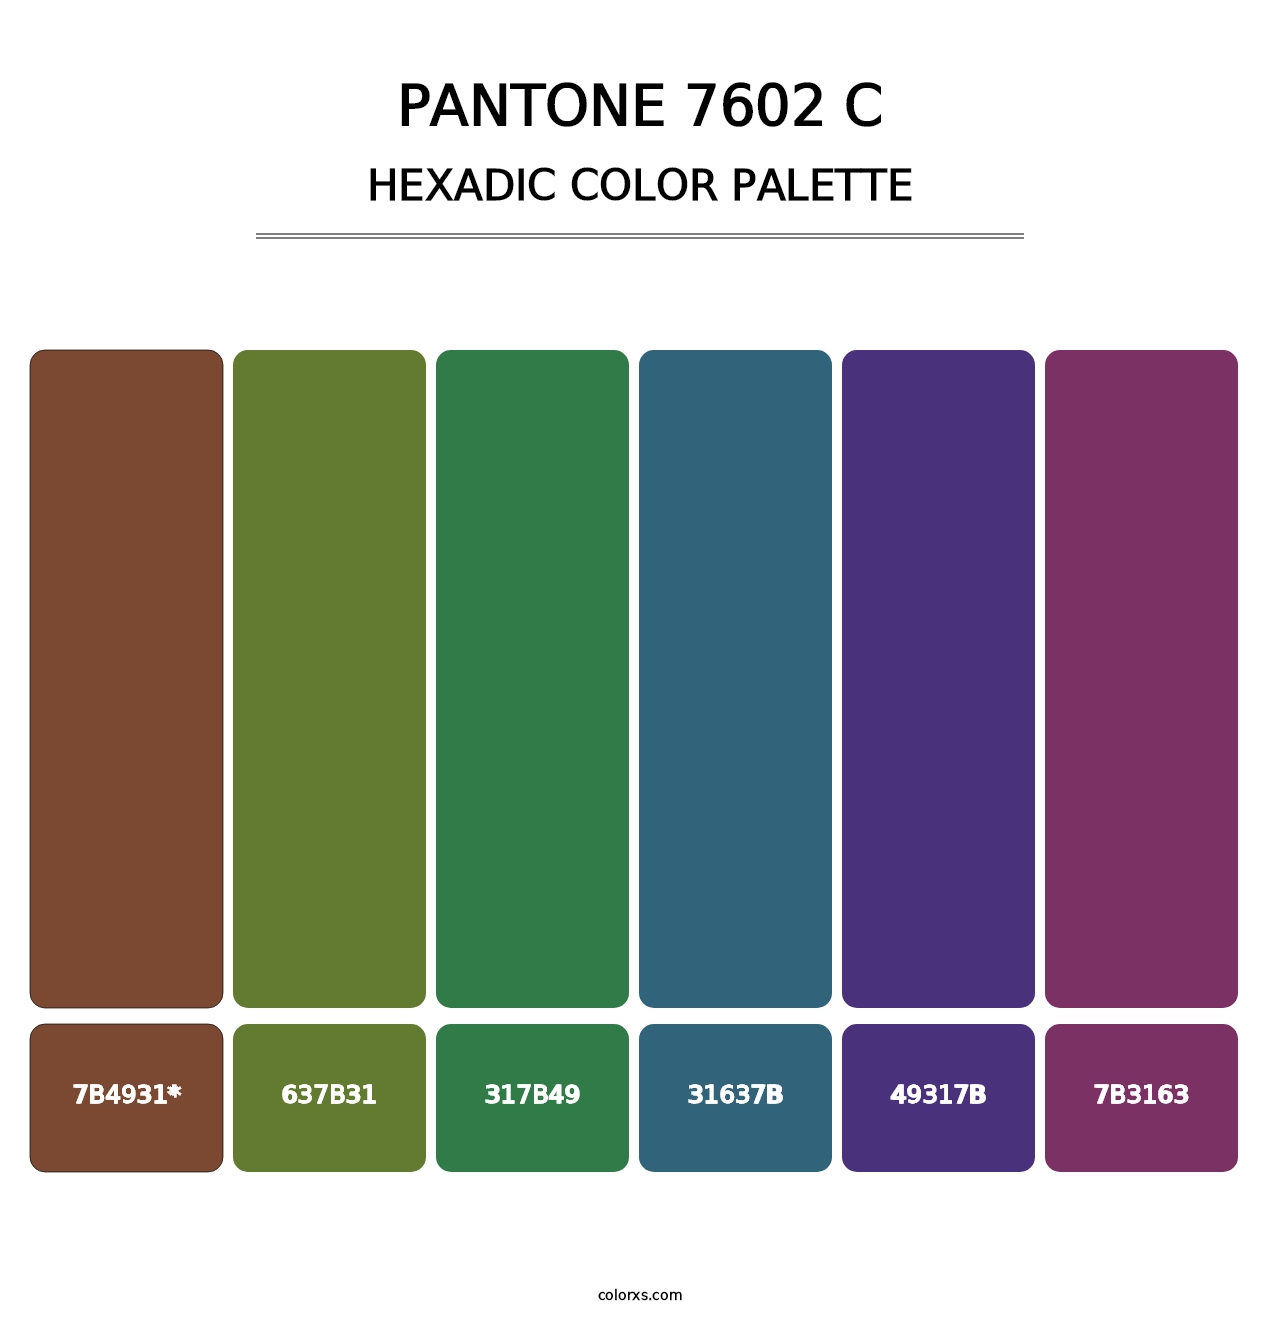 PANTONE 7602 C - Hexadic Color Palette